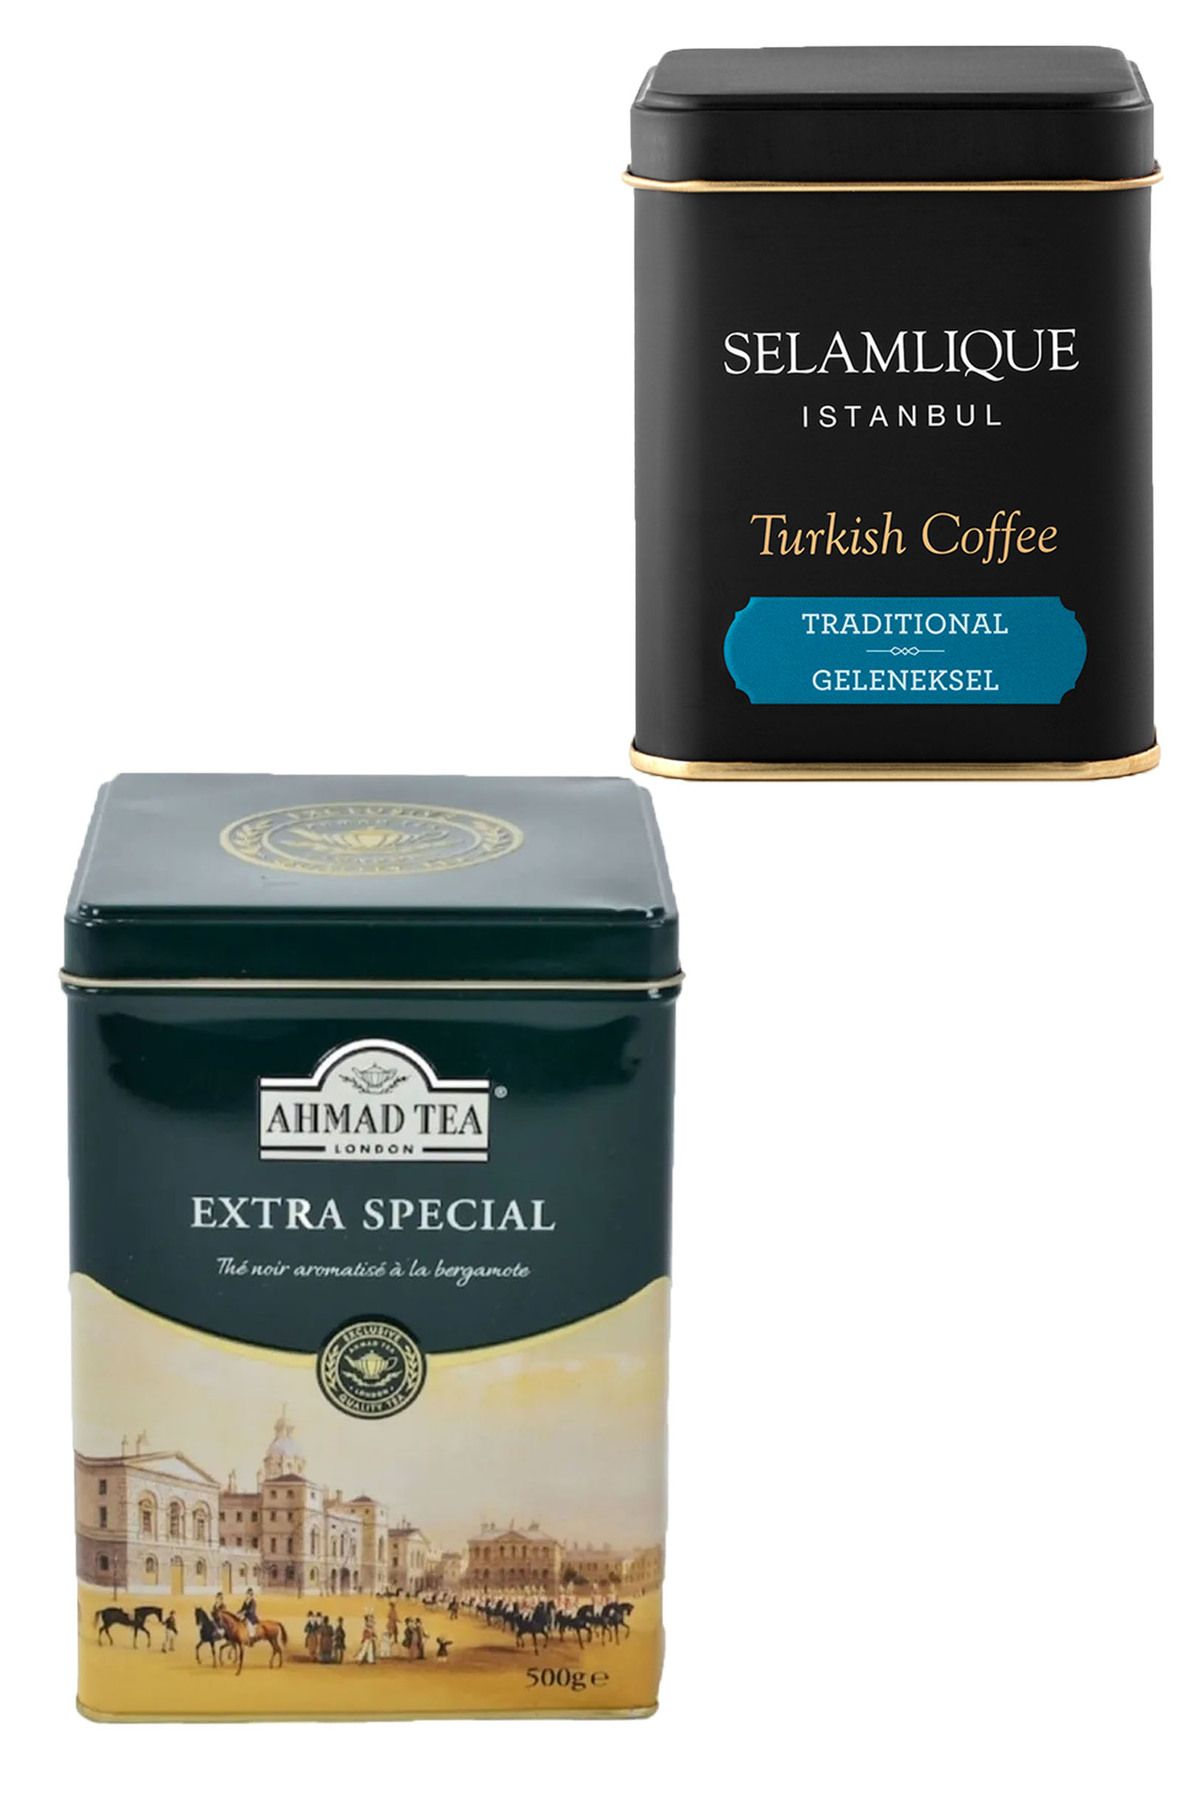 Selamlique 125g Geleneksel Türk Kahvesi + Ahmad Tea Extra Specıal Teneke 500g